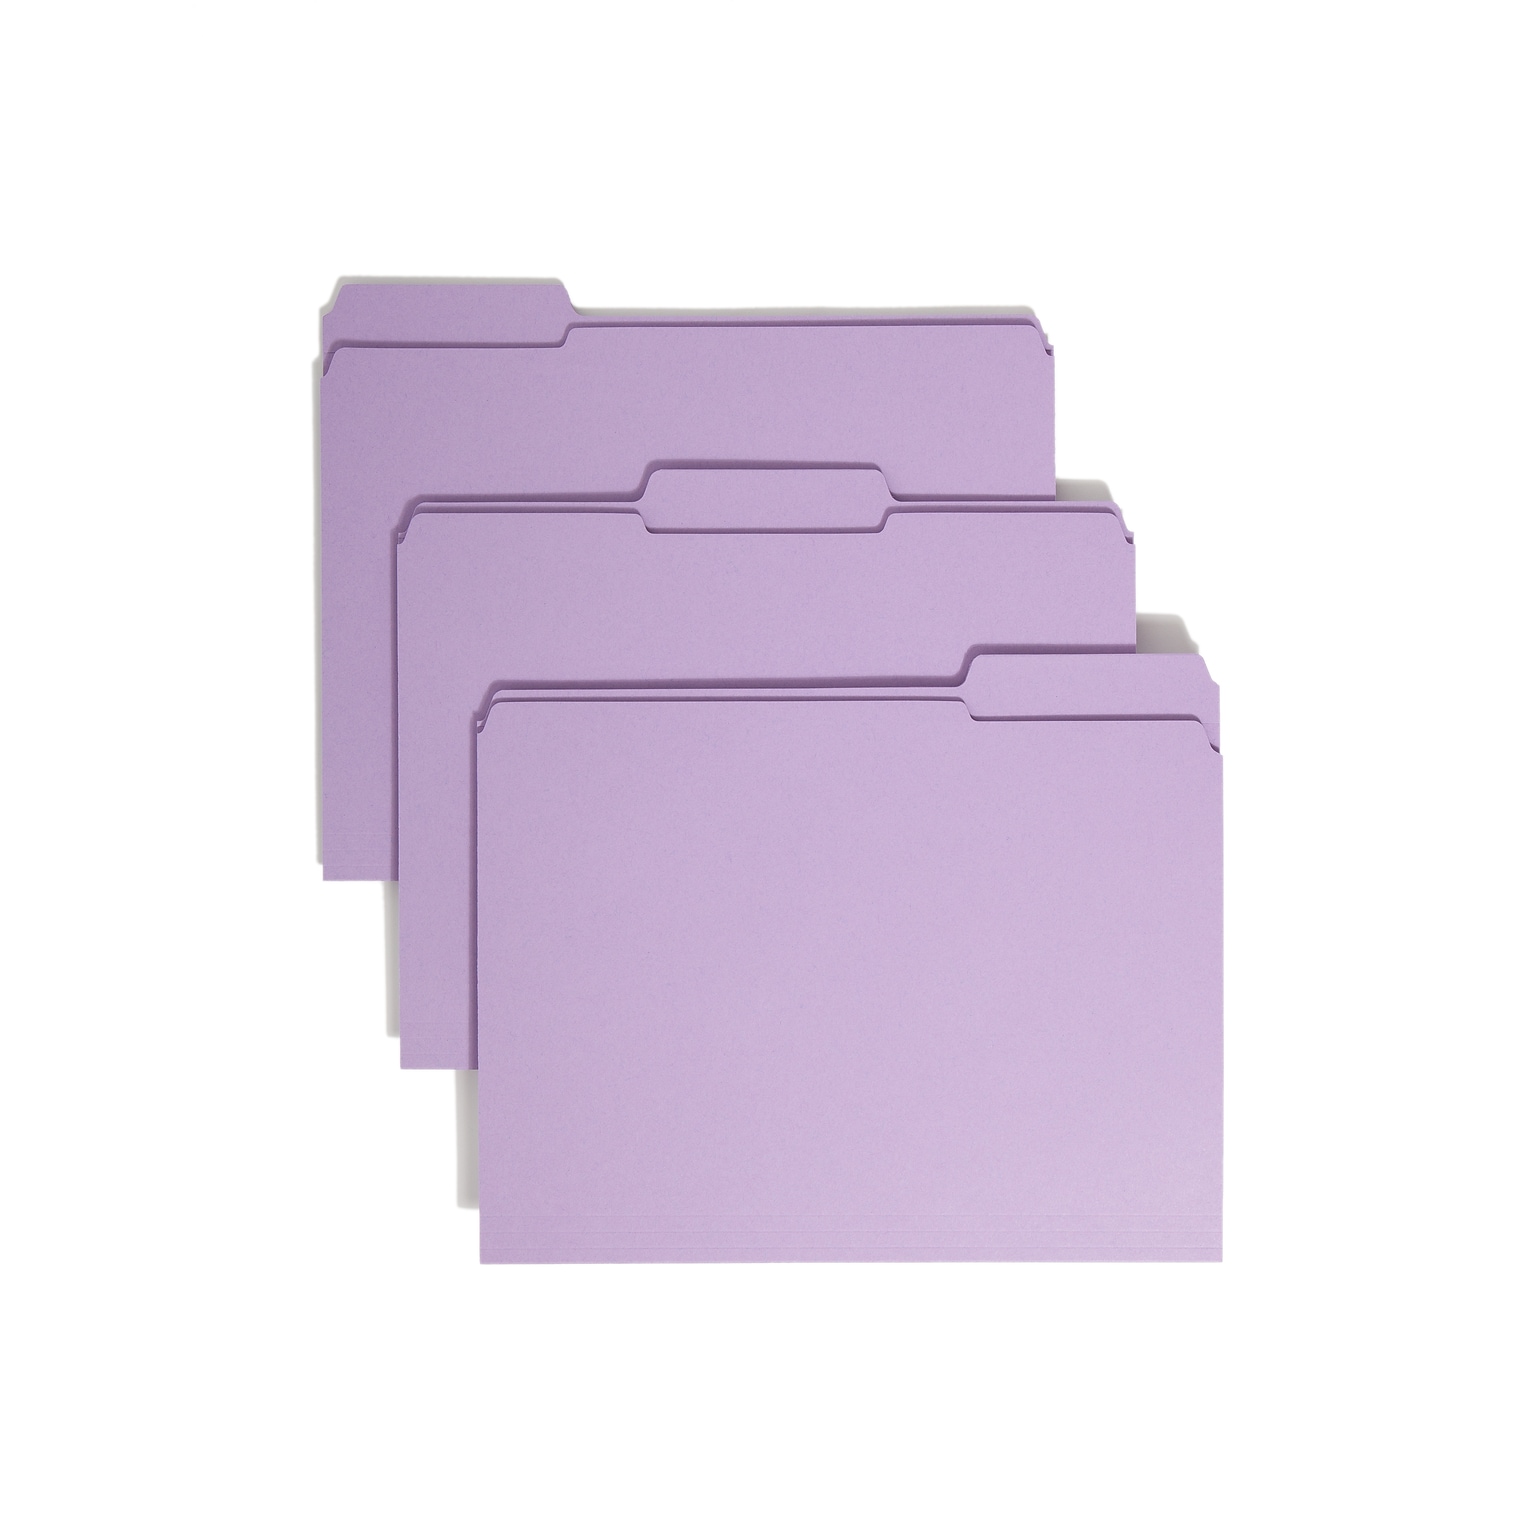 Smead File Folder, 3 Tab, Letter Size, Lavender, 100/Box (12434)